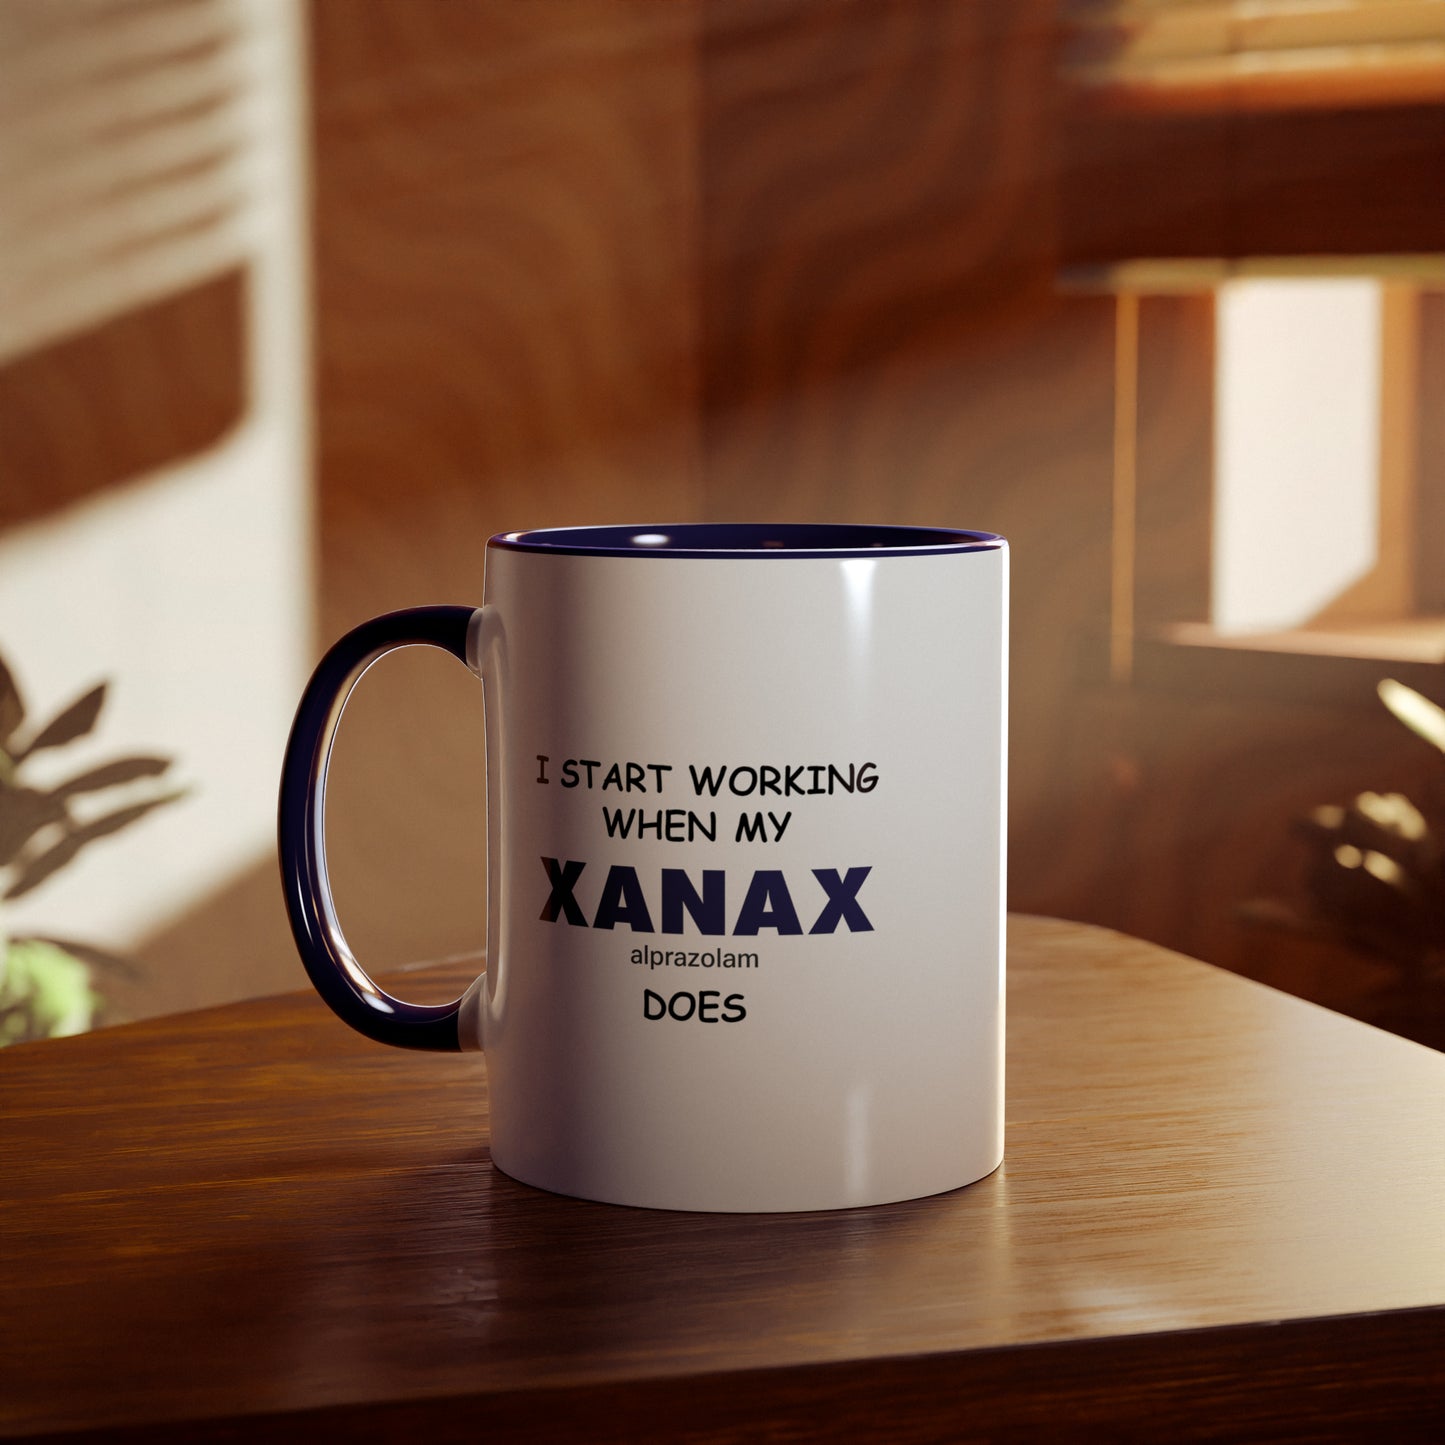 I Start Working When My Xanax Does, Funny Morning Meme Mug